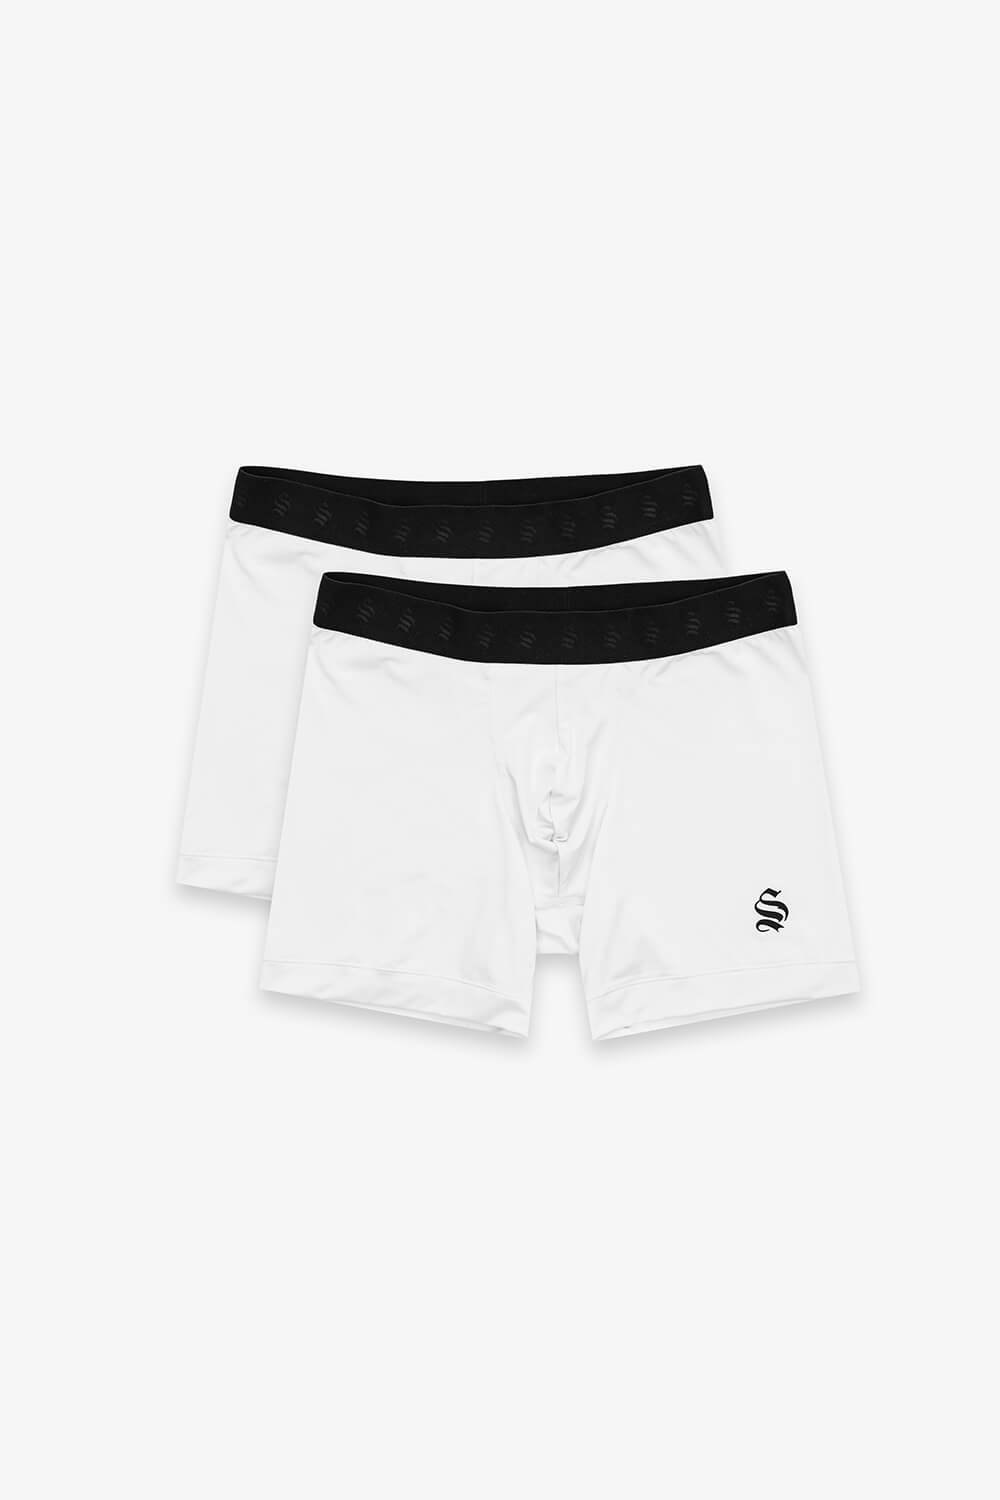 Emblem Boxer Shorts - White (2 Pack)